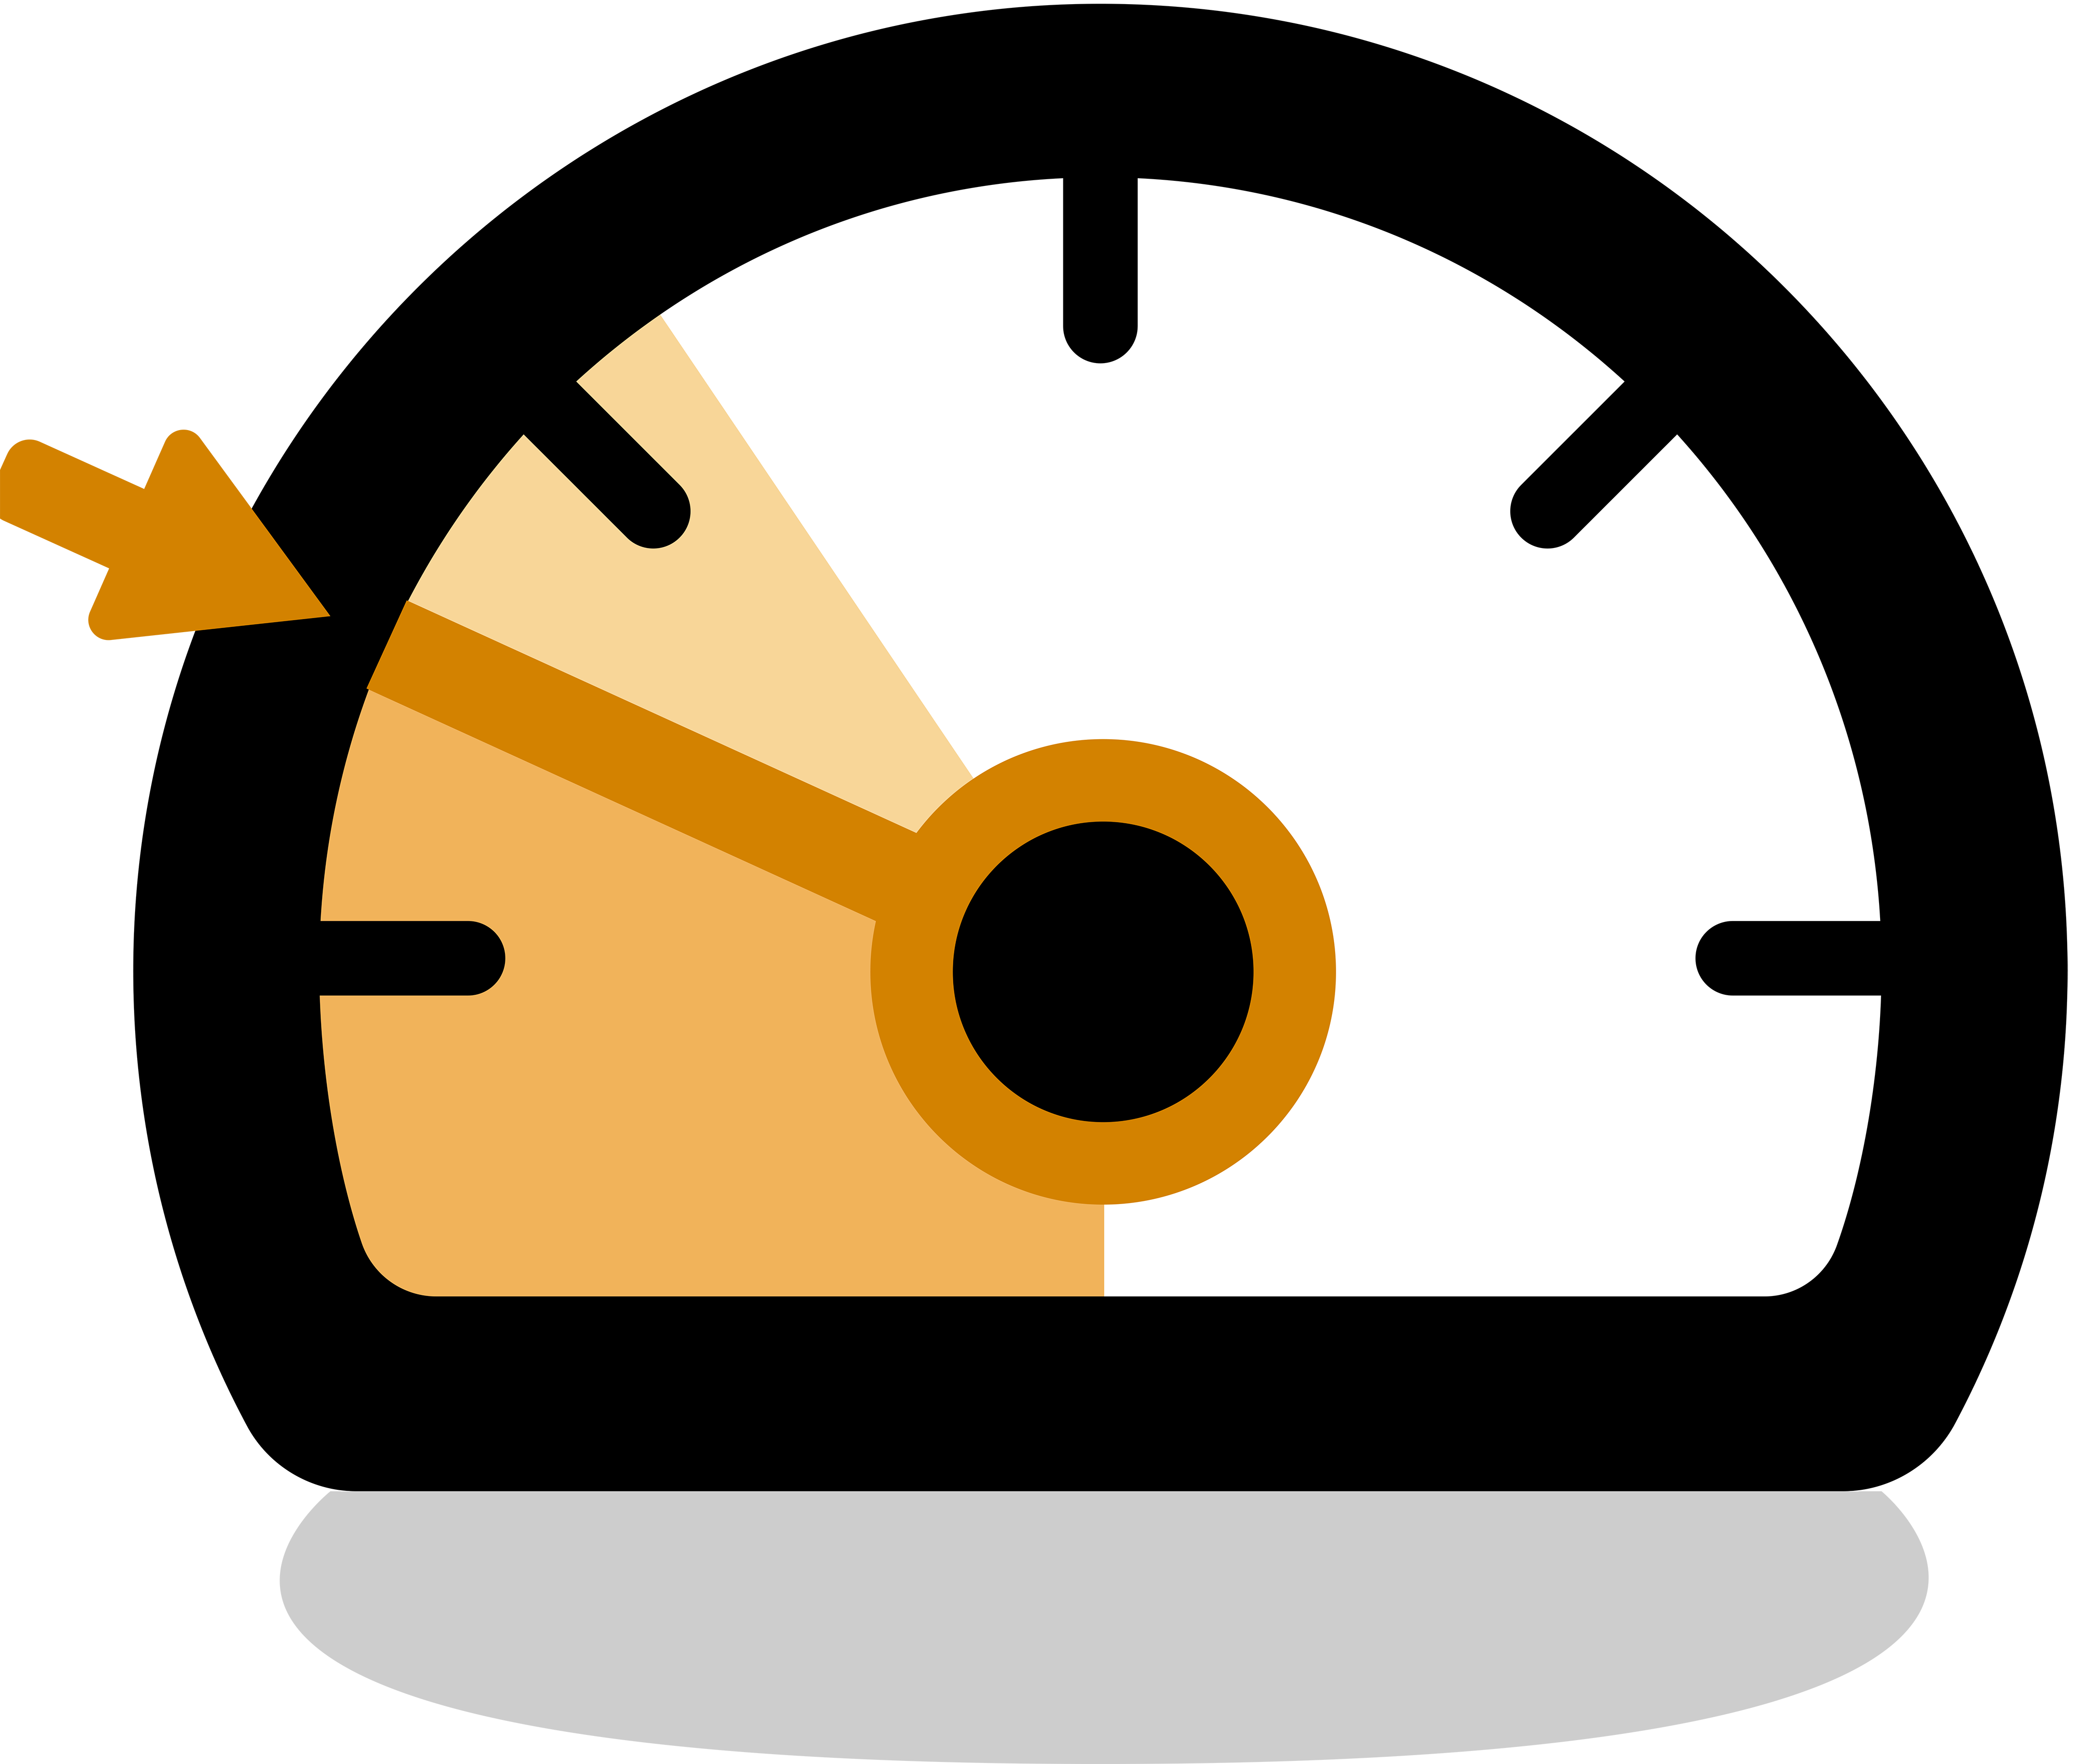 Speedometer illustration